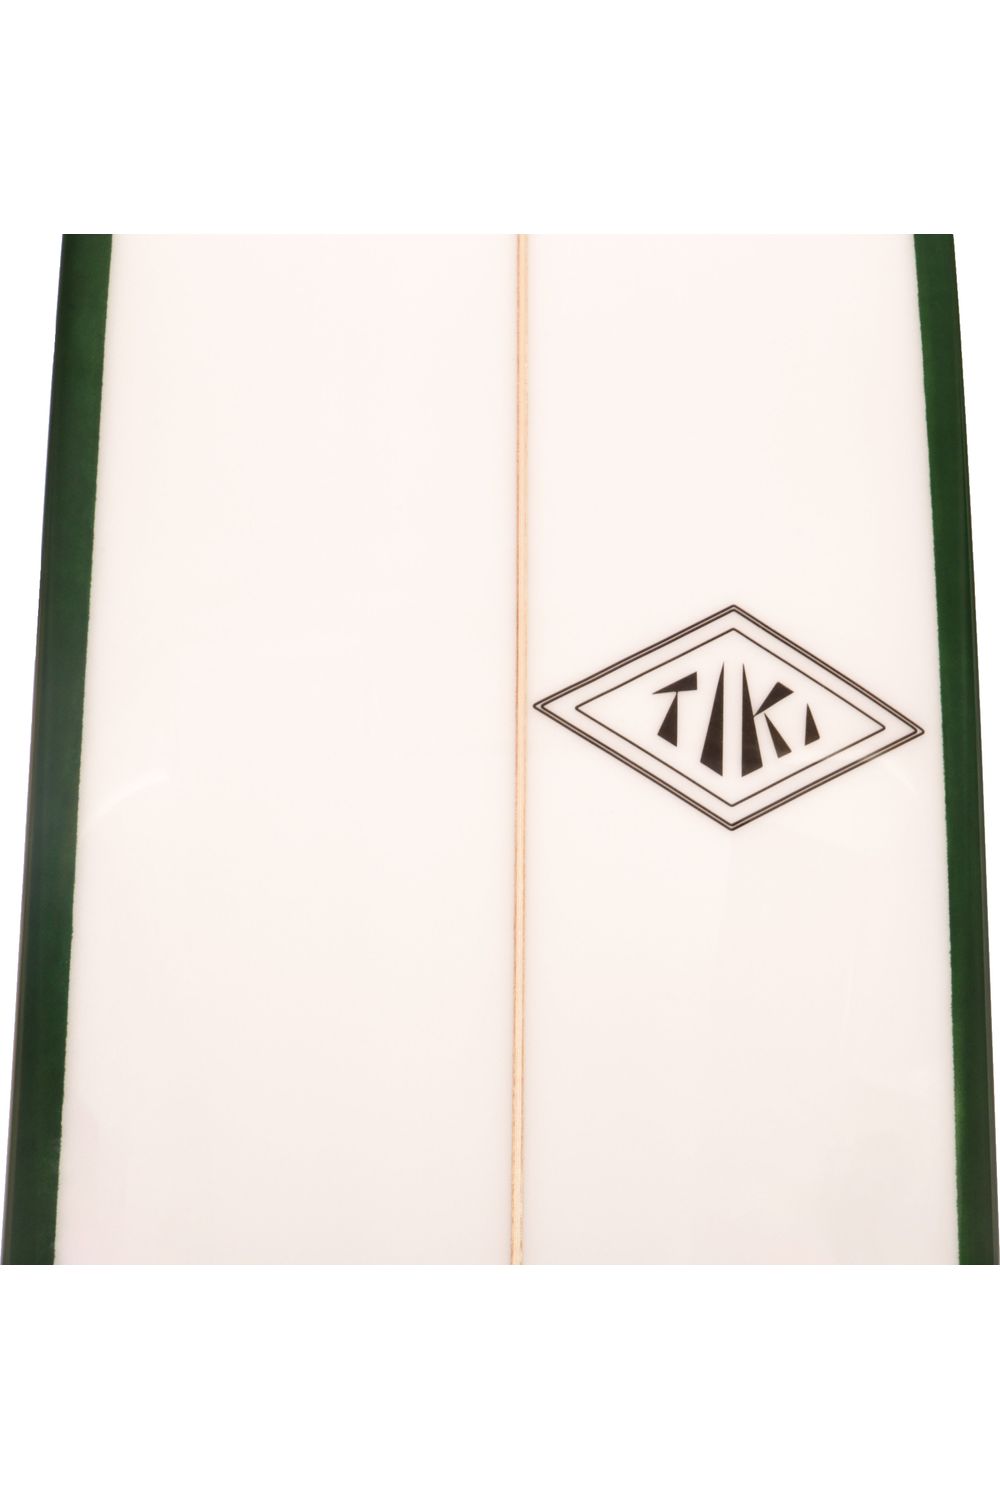 Tiki Custom Surfboard - 9'6 Totem Mal - Fascol Racing Green